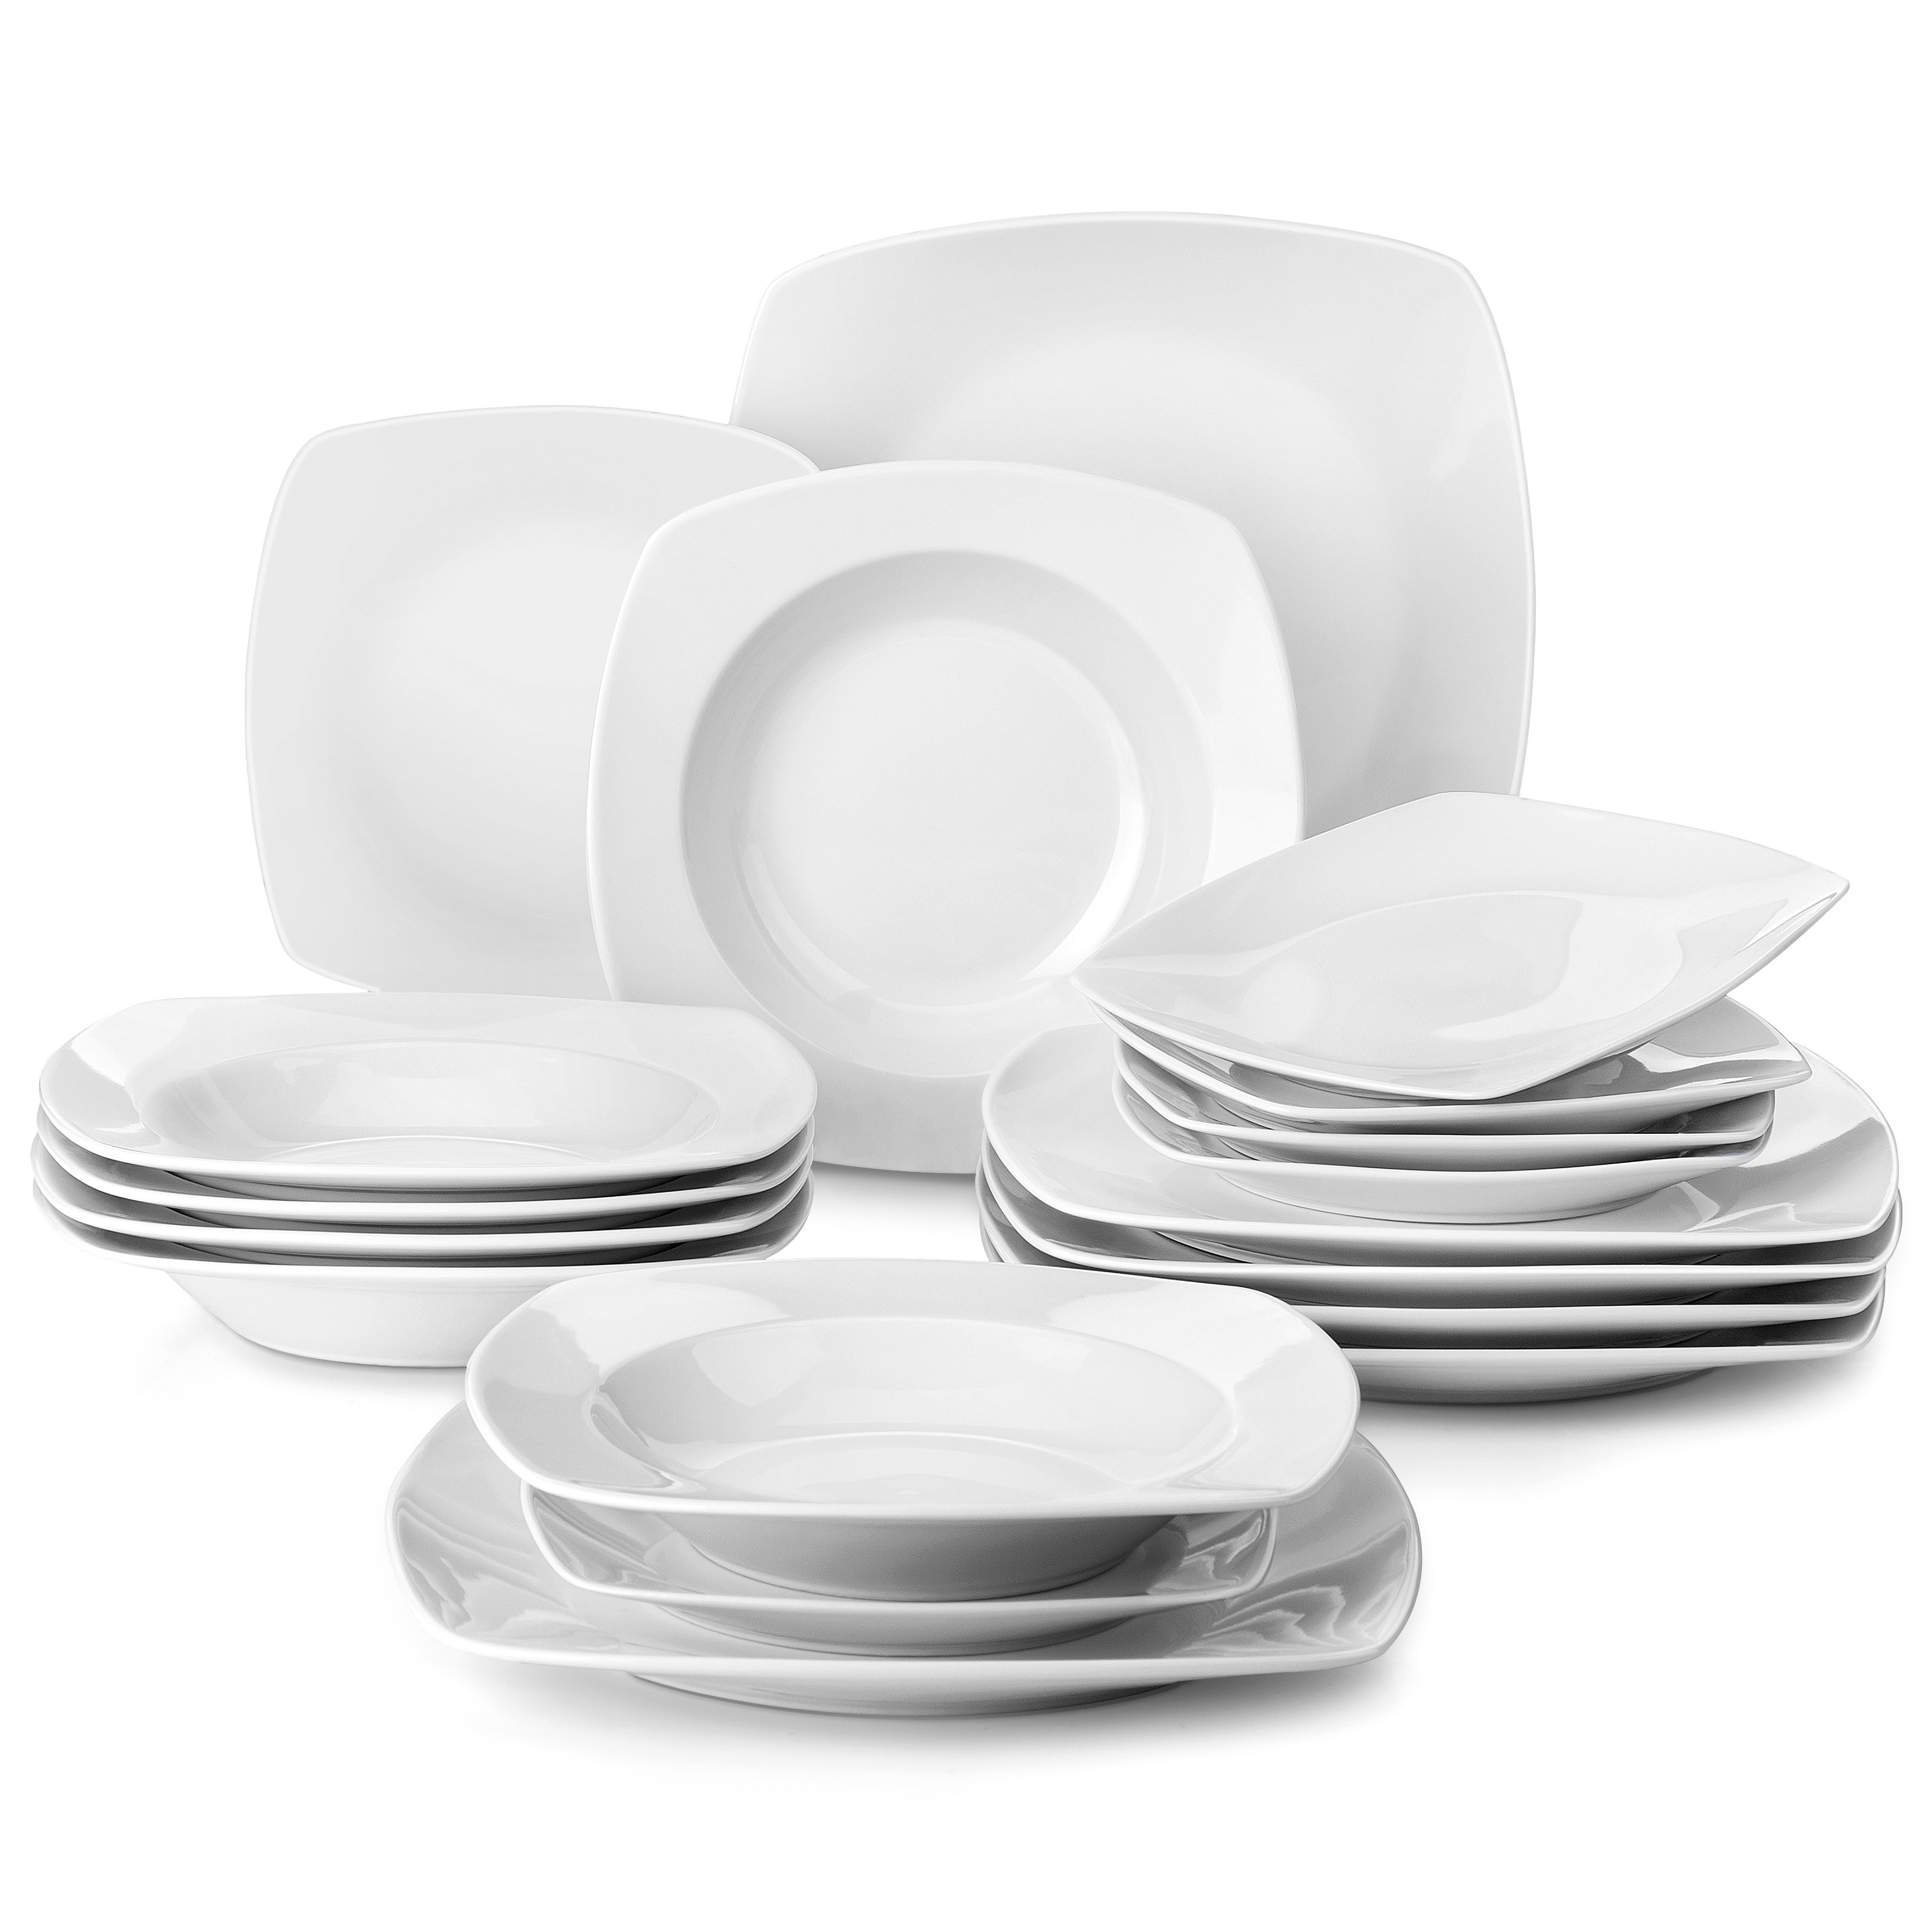 MALACASA Dishes Set for 4, 16 Piece Bone China White Plates and